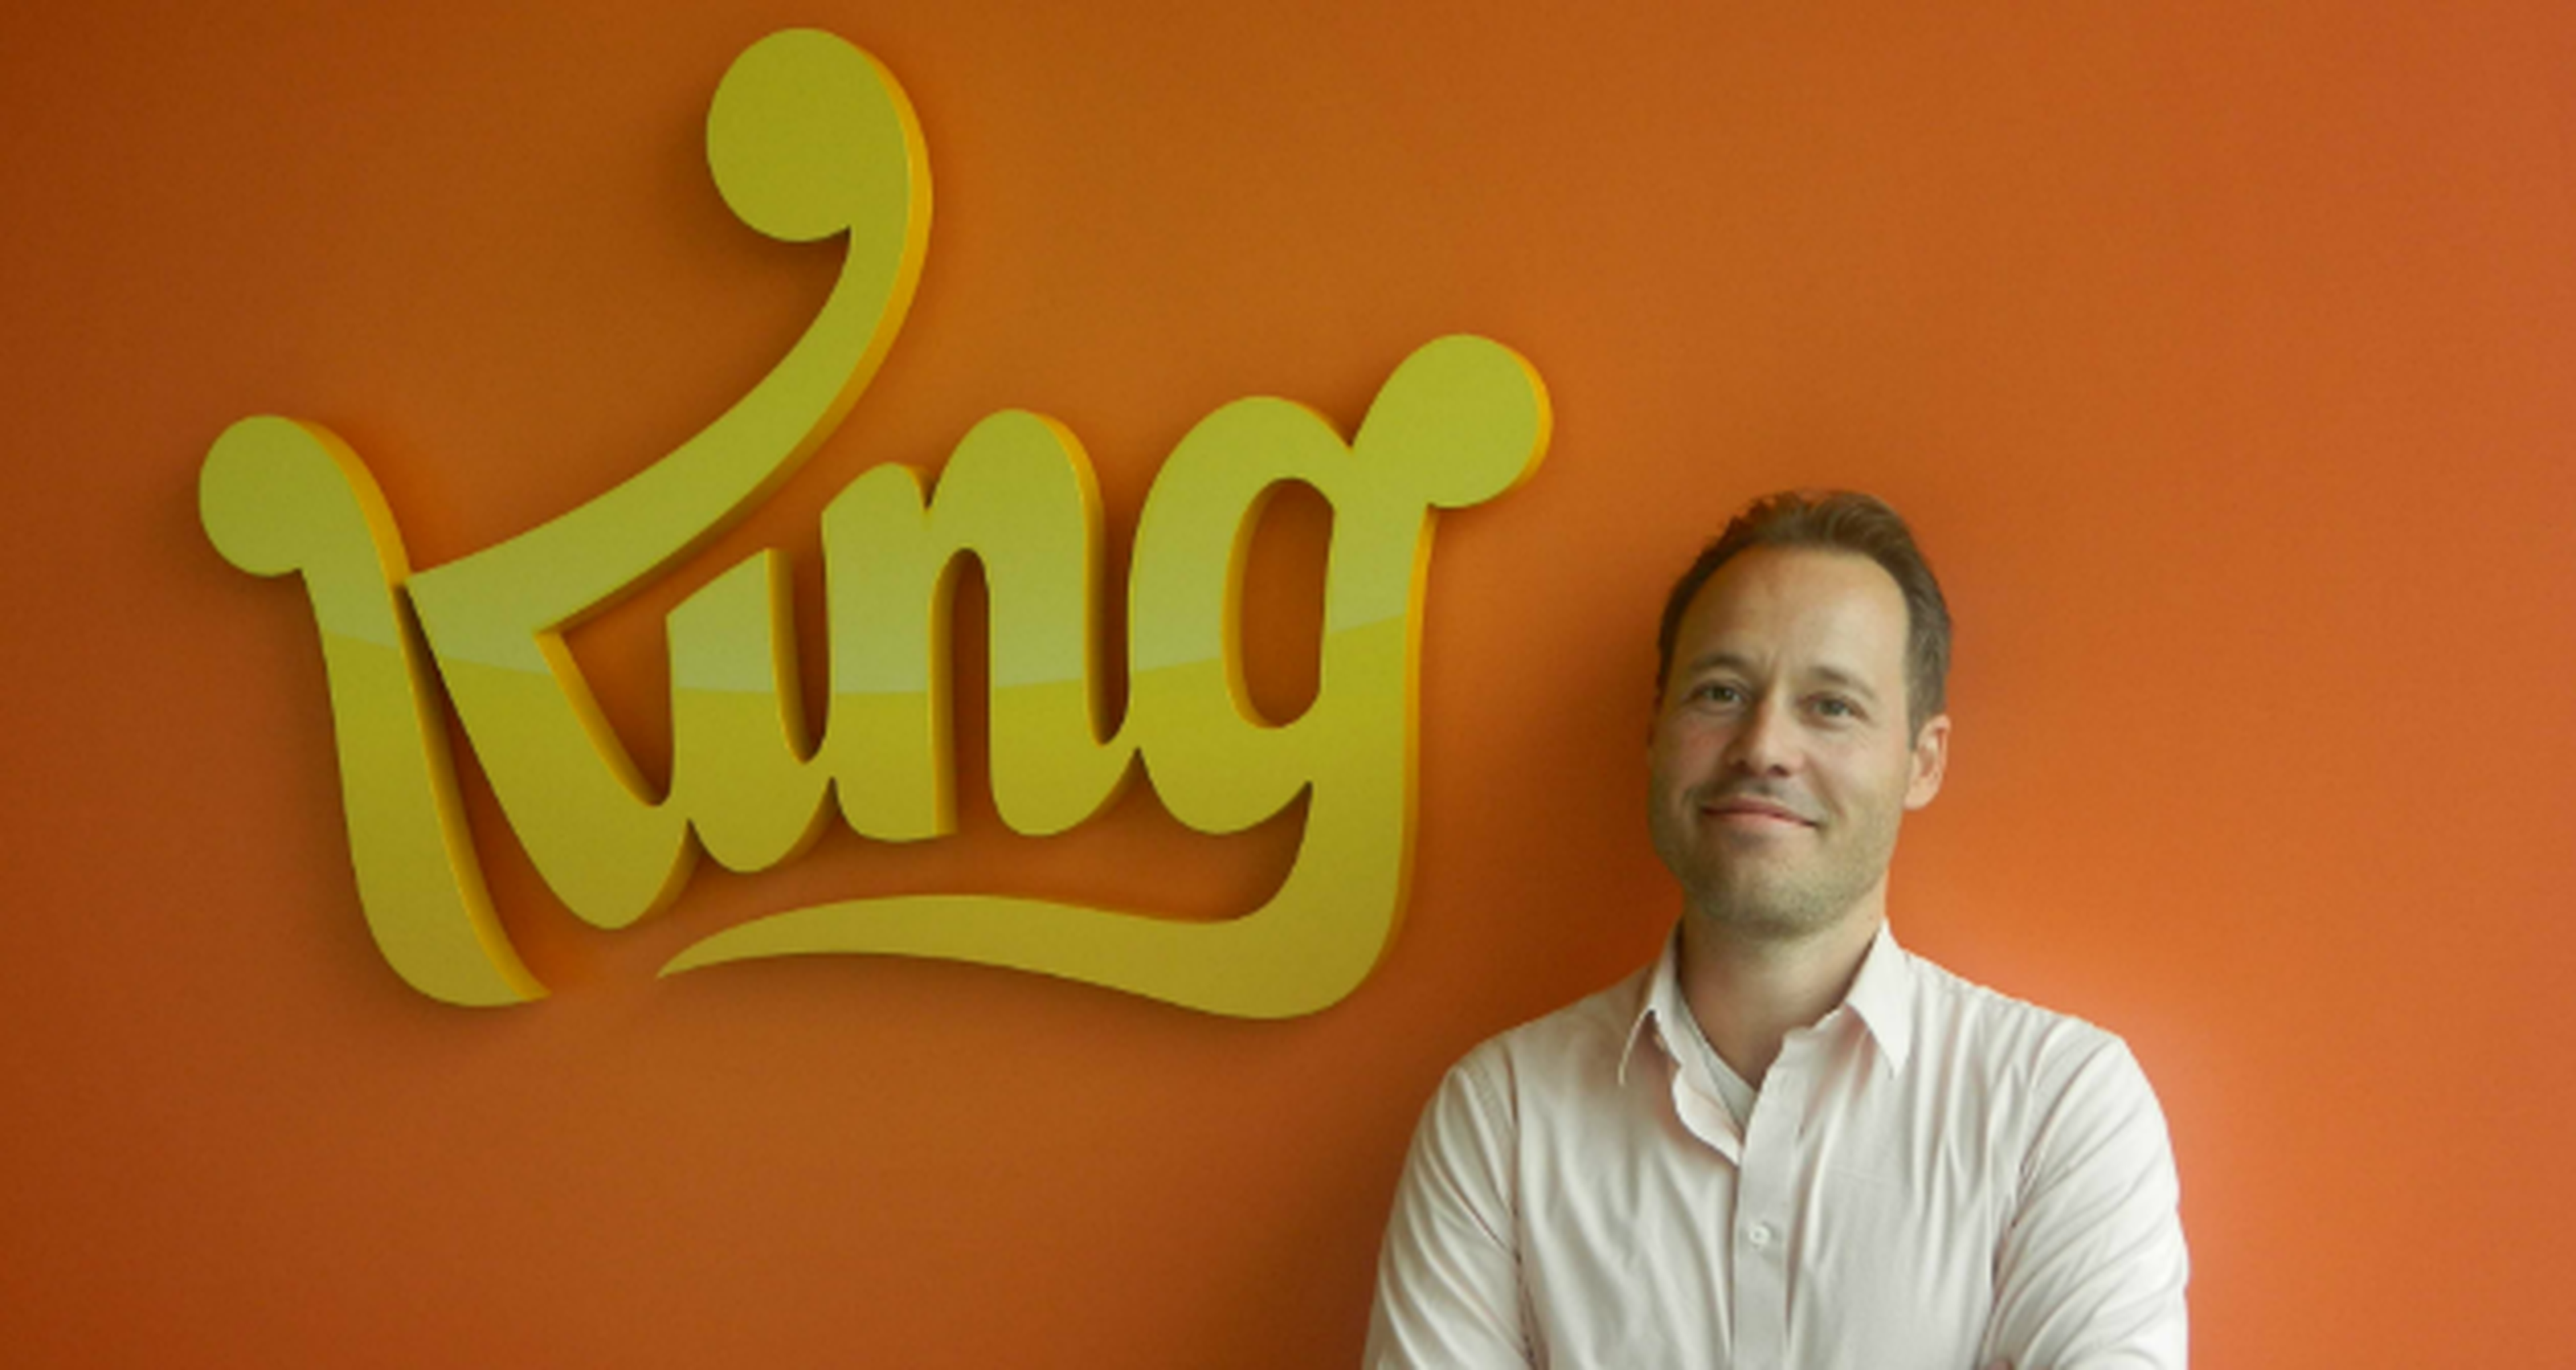 Entrevista a Sebastian Knutsson, co-fundador y director creativo en King